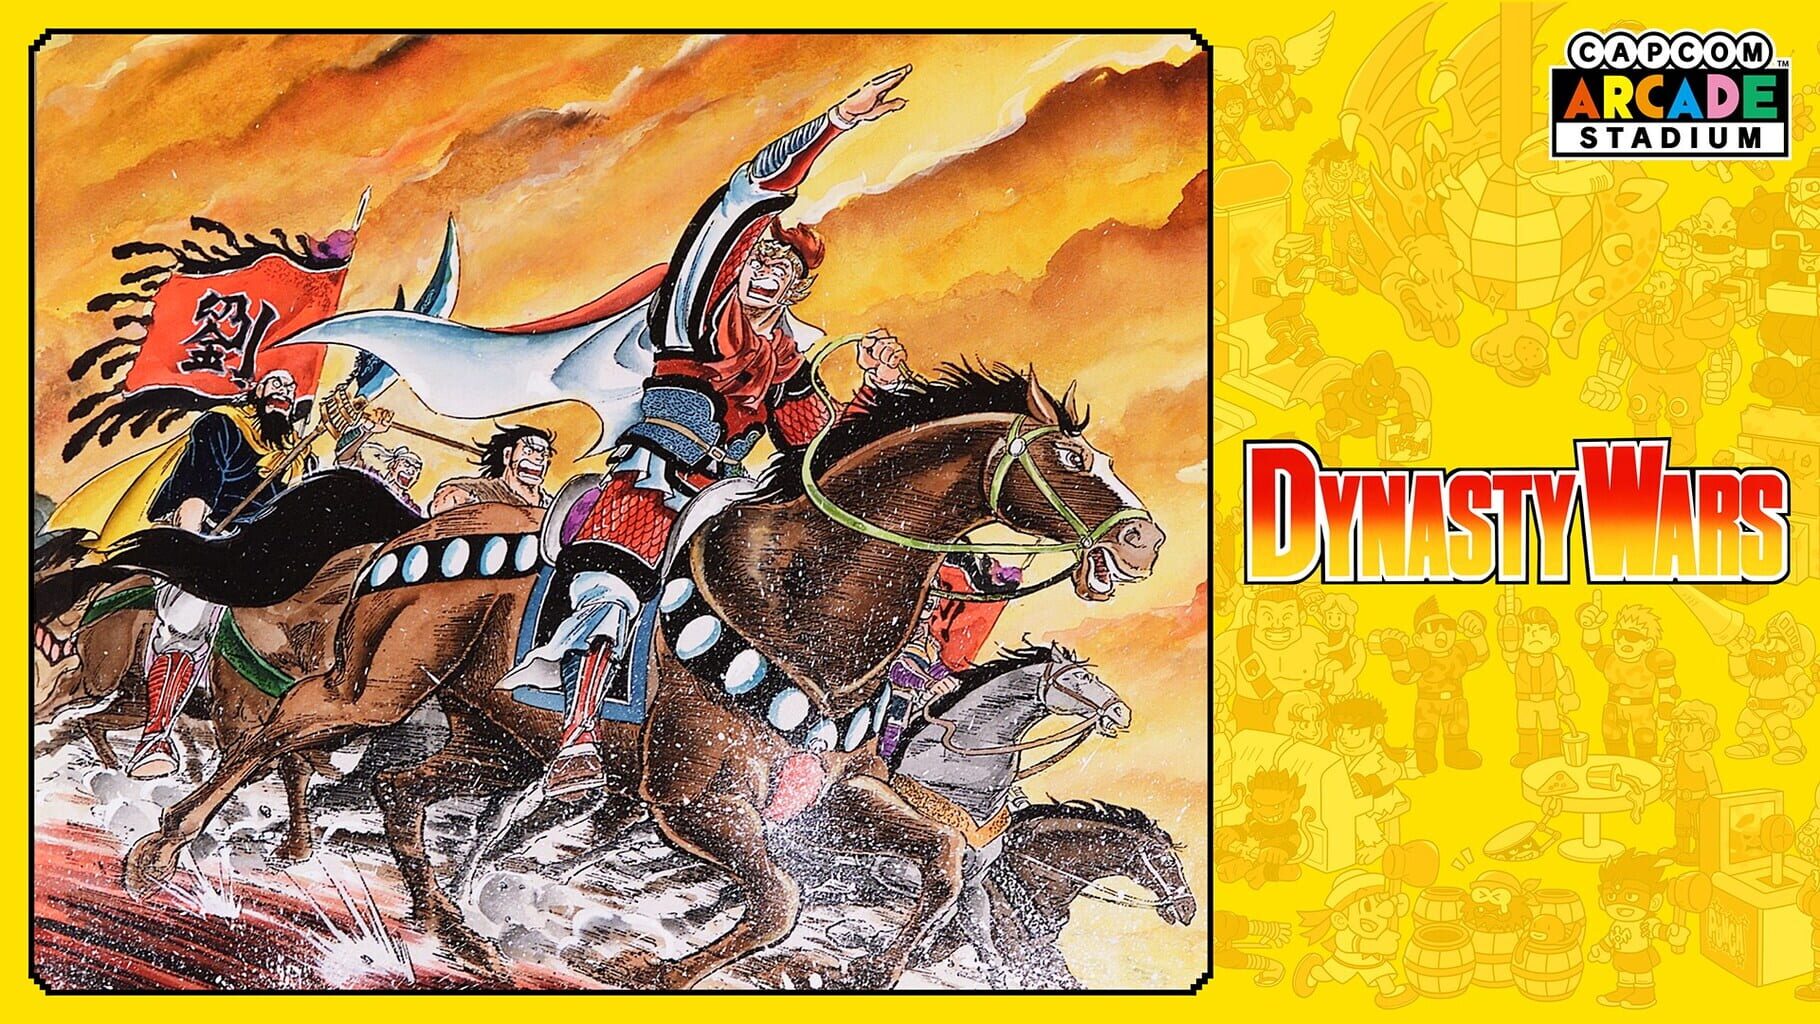 Capcom Arcade Stadium: Dynasty Wars artwork